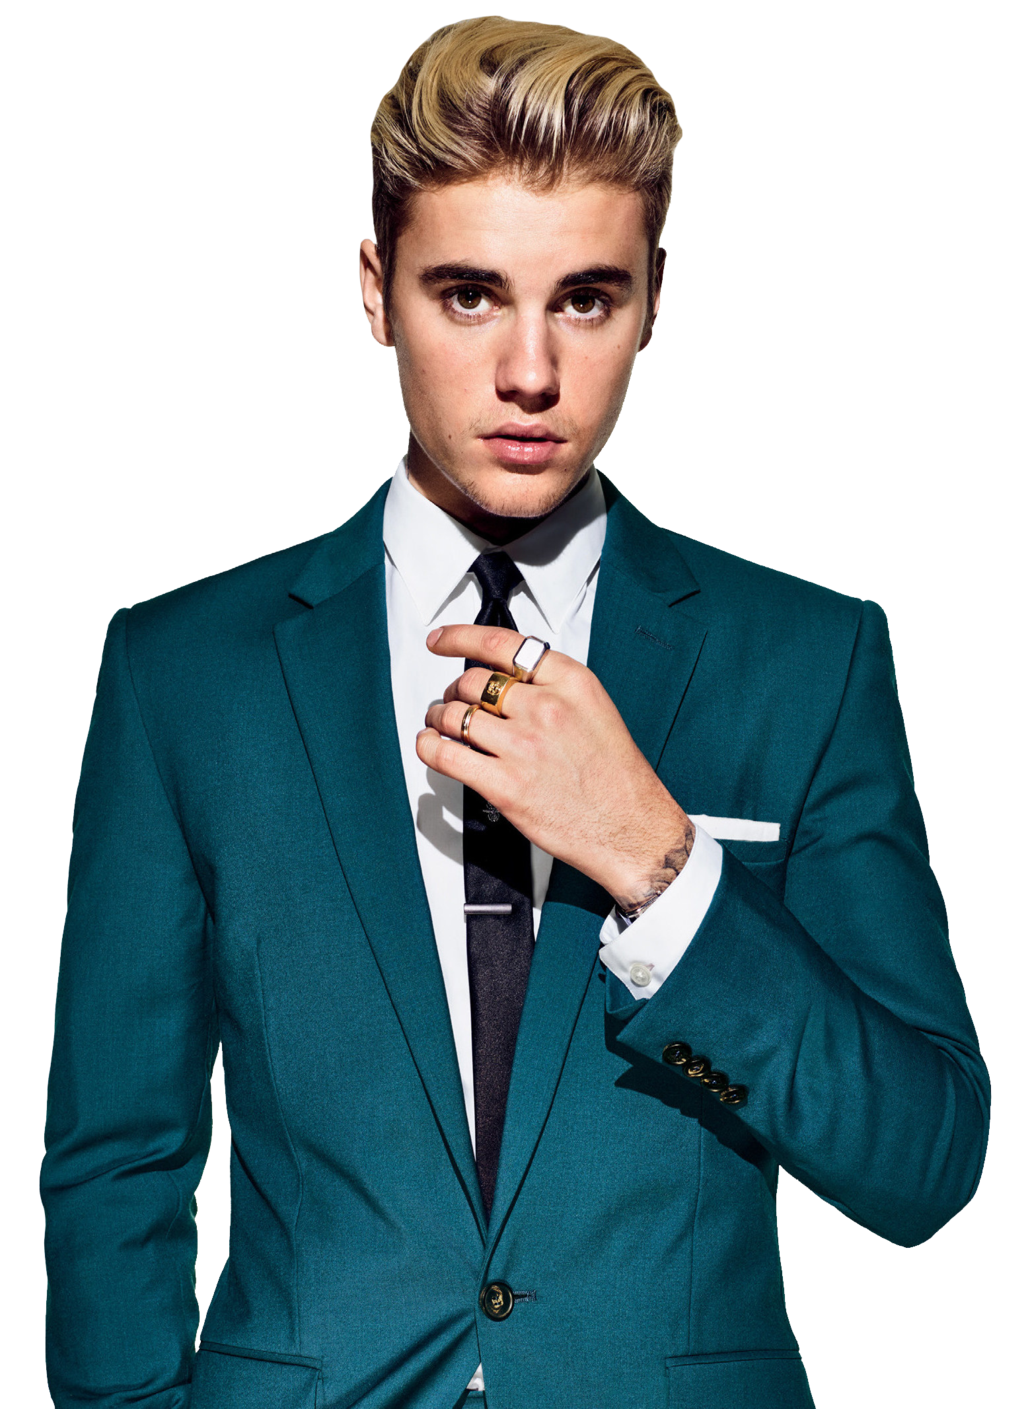 Download Justin Bieber Picture HQ PNG Image | FreePNGImg